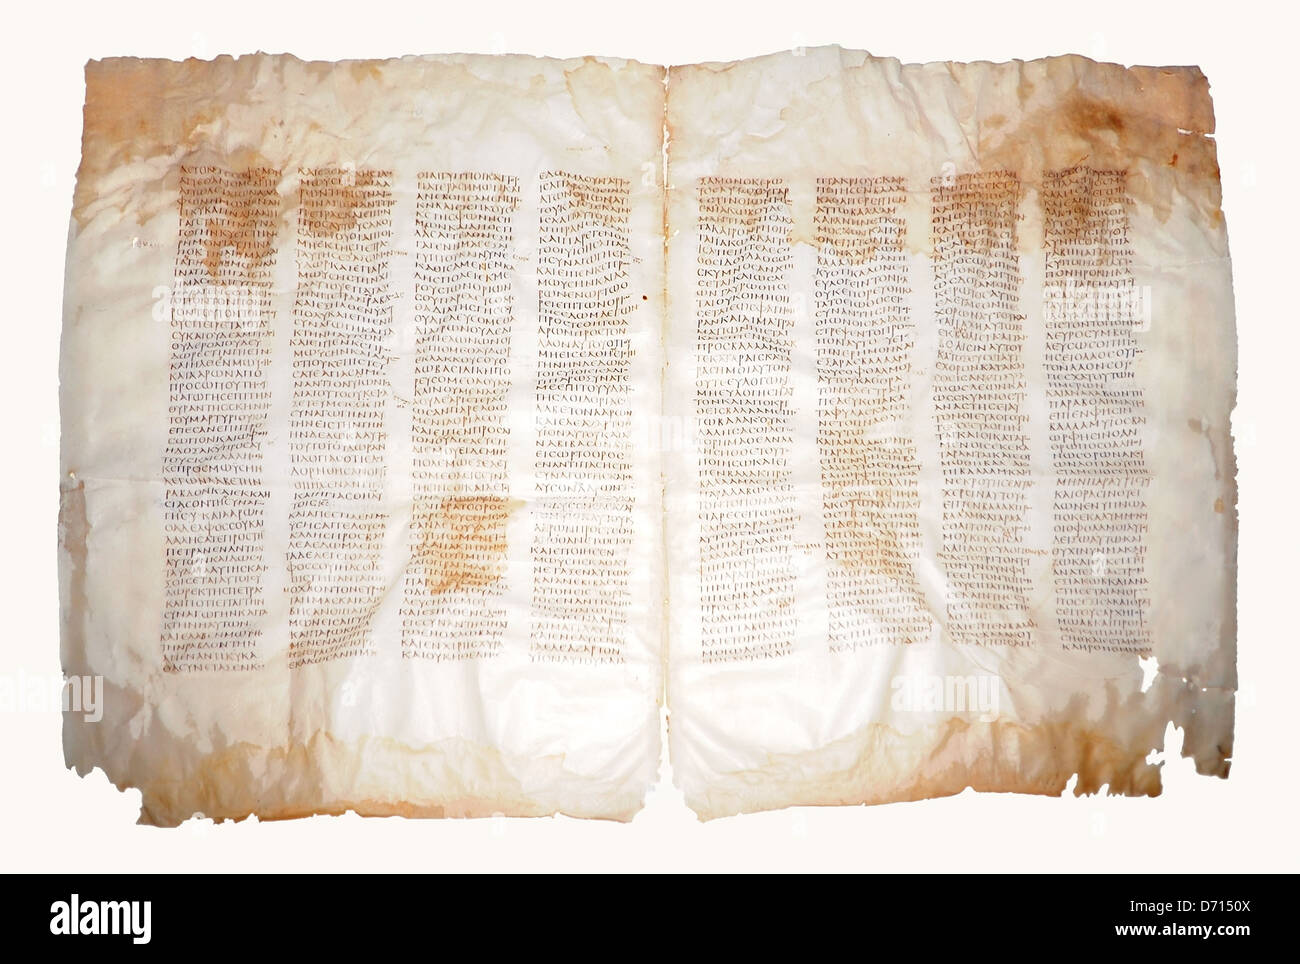 Codex Sinaiticus (Sinai Bible), Saint Catherine's Monastery (Saint Catherine Area), Sinai Peninsula, Egypt Stock Photo